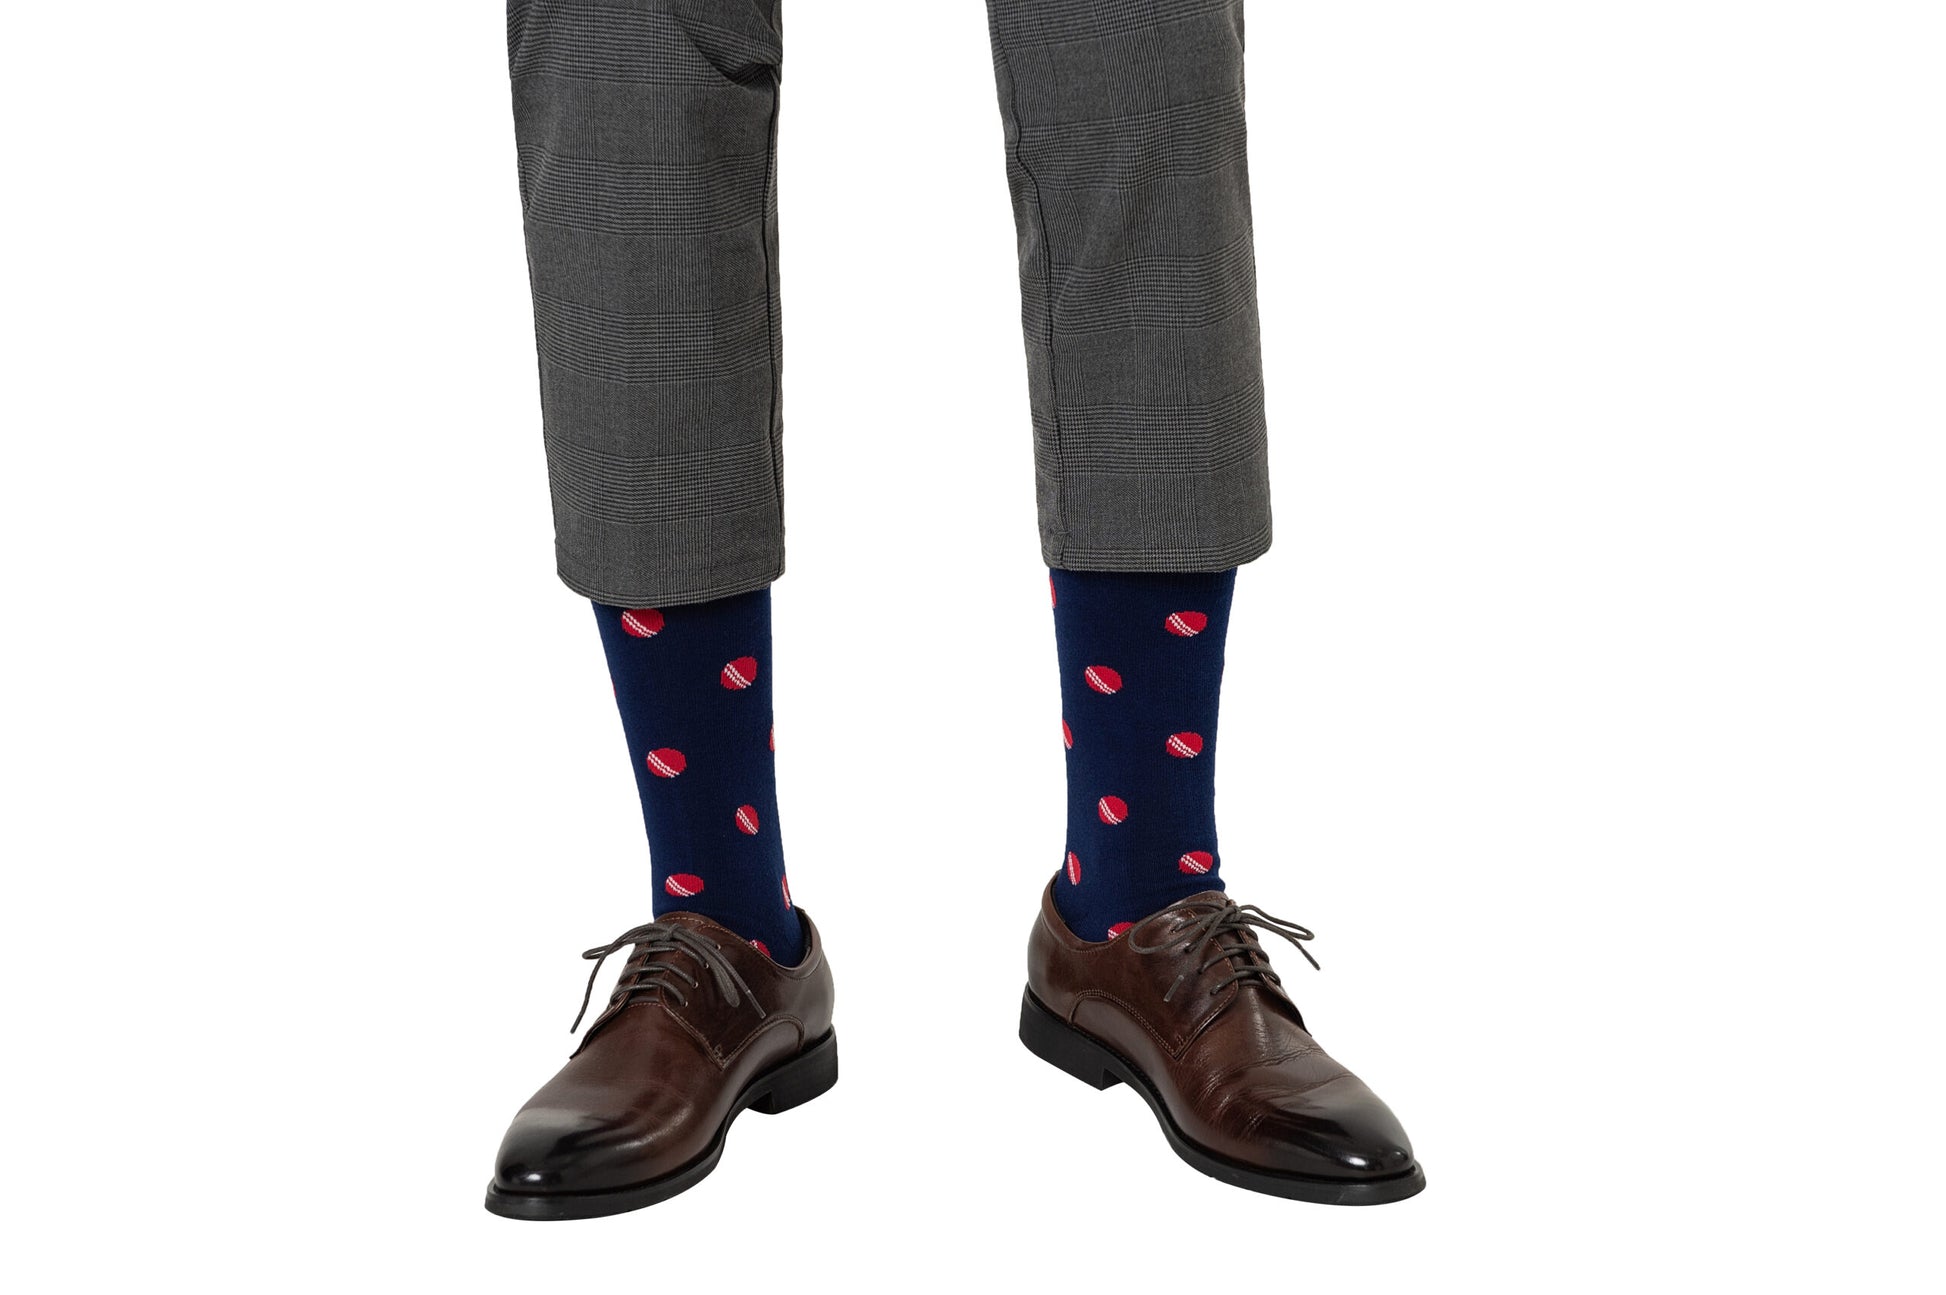 A man wearing a pair of Cricket Socks.